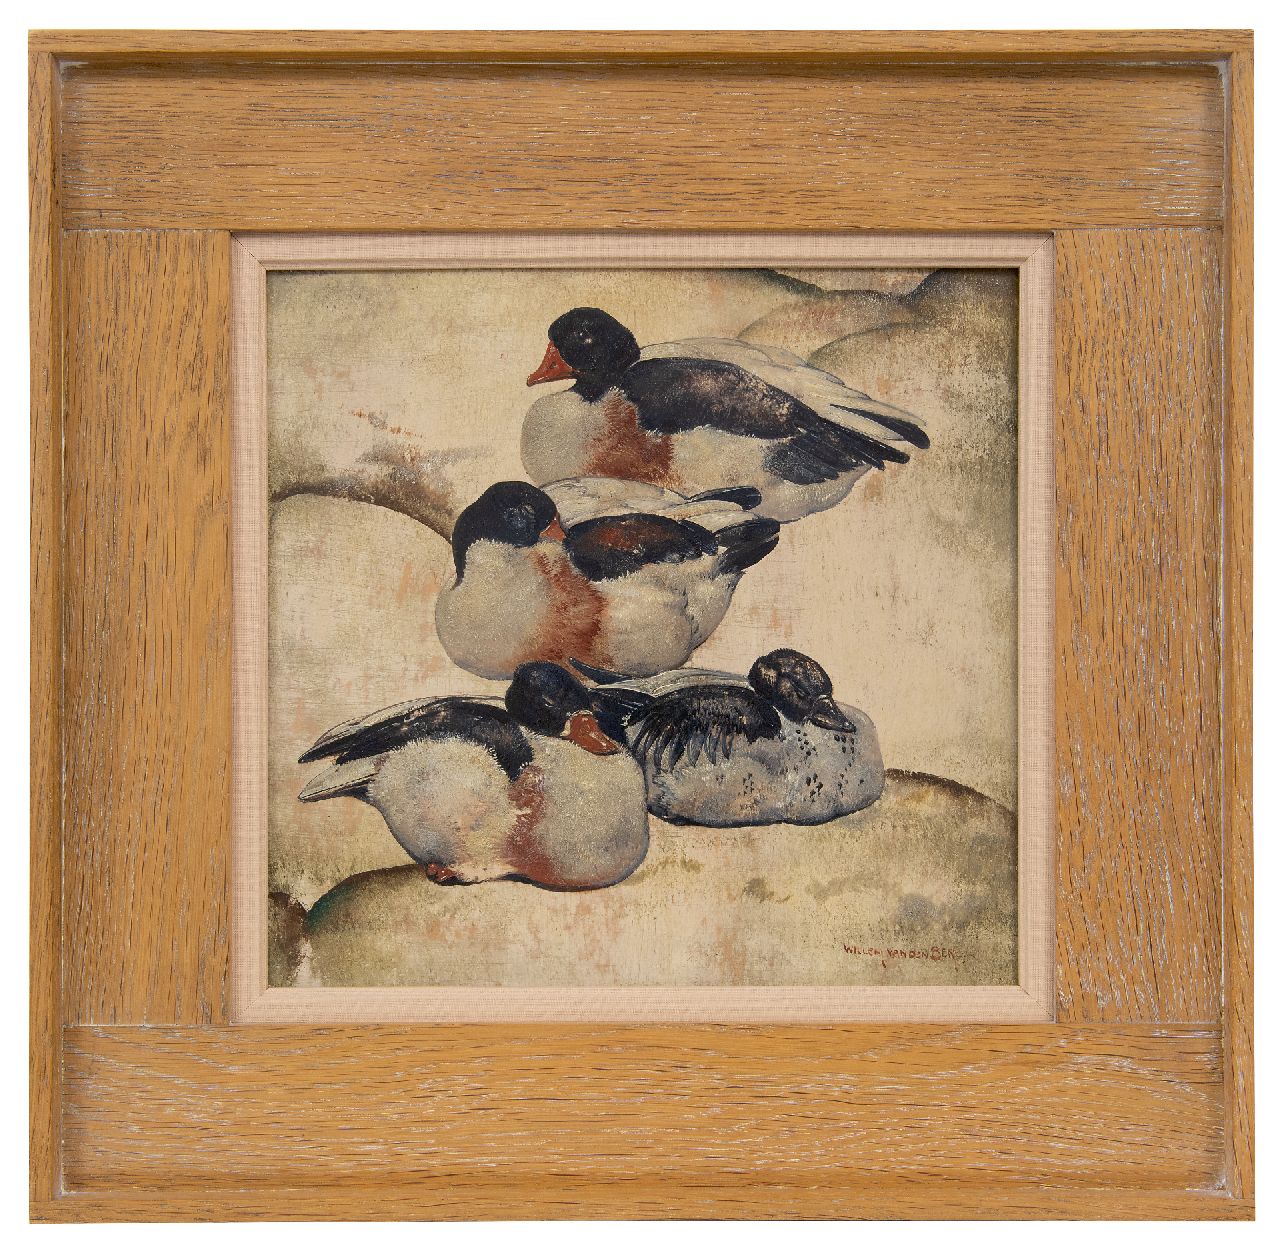 Berg W.H. van den | 'Willem' Hendrik van den Berg | Paintings offered for sale | Four ducks, oil on panel 26.4 x 27.5 cm, signed l.r. and verso dated October 1935